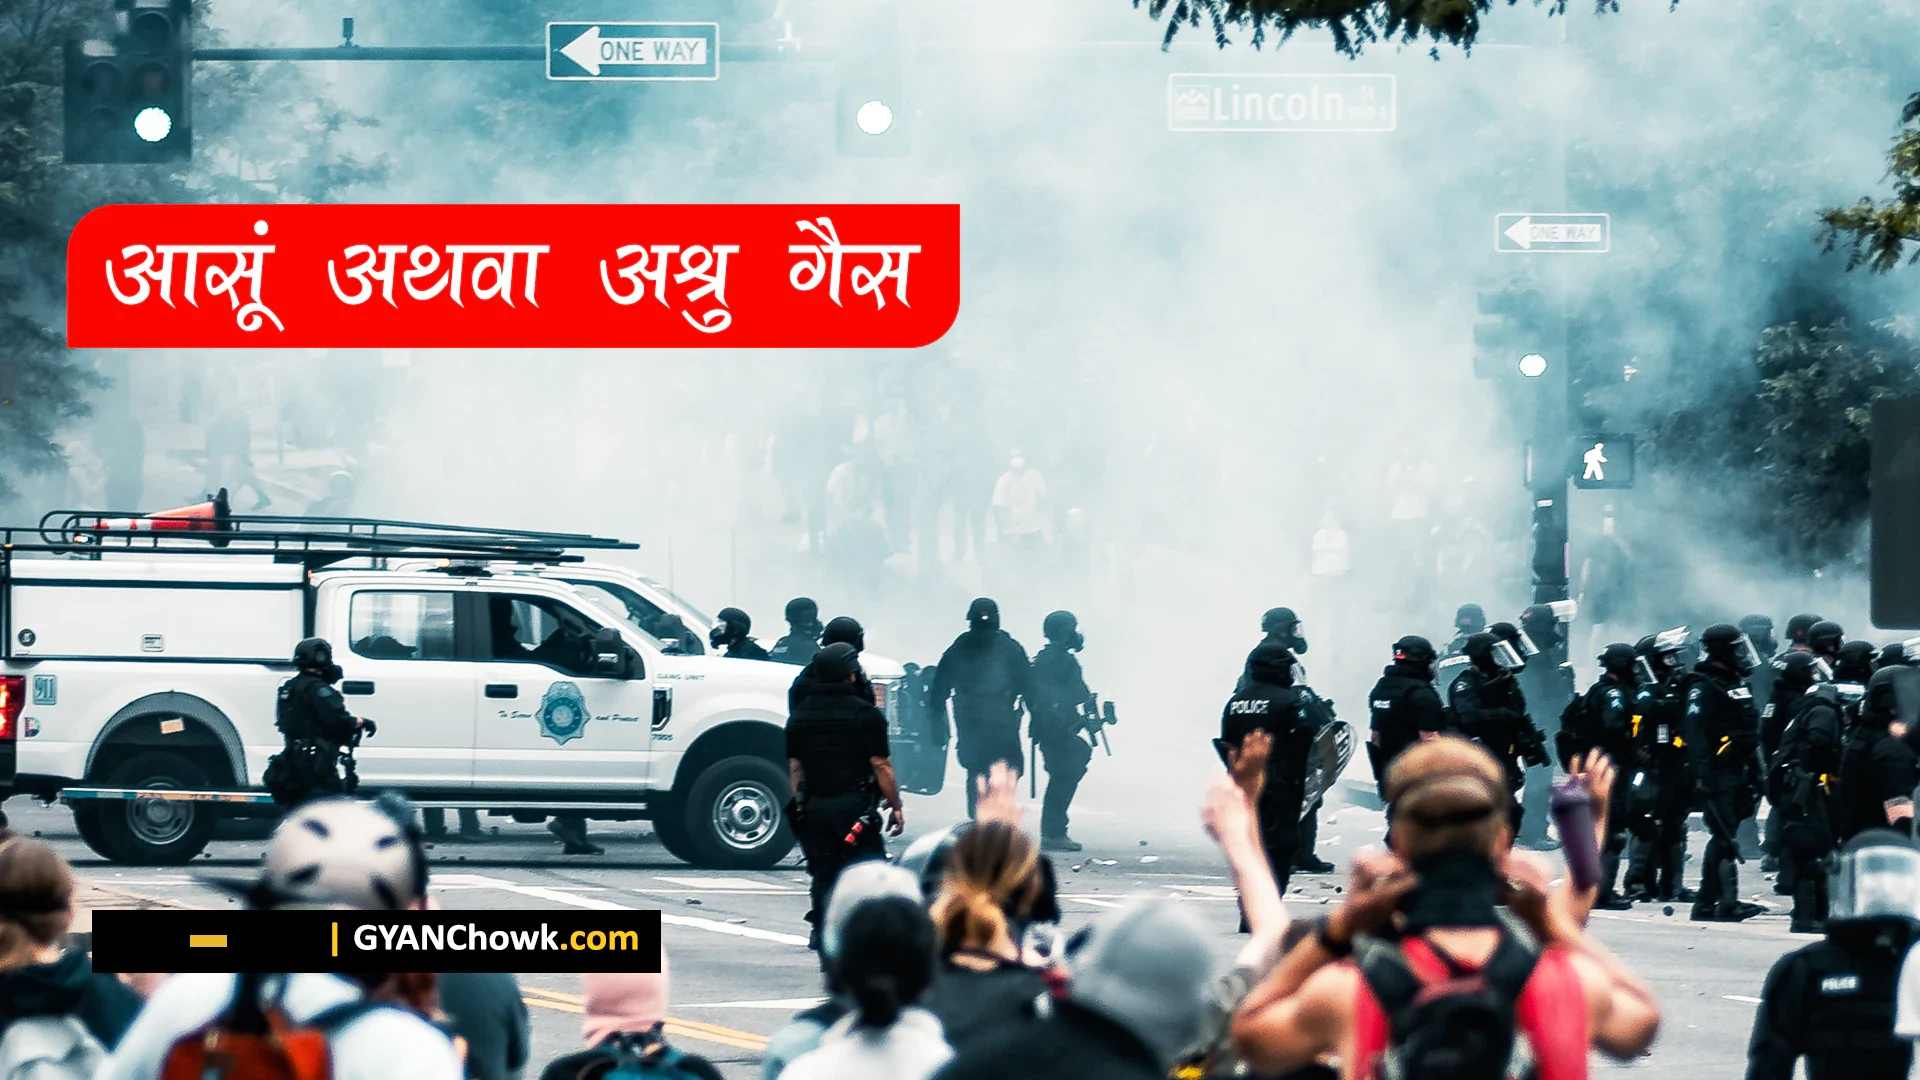 आंसू अथवा अश्रु गैस - Tear gas Hindi photo text